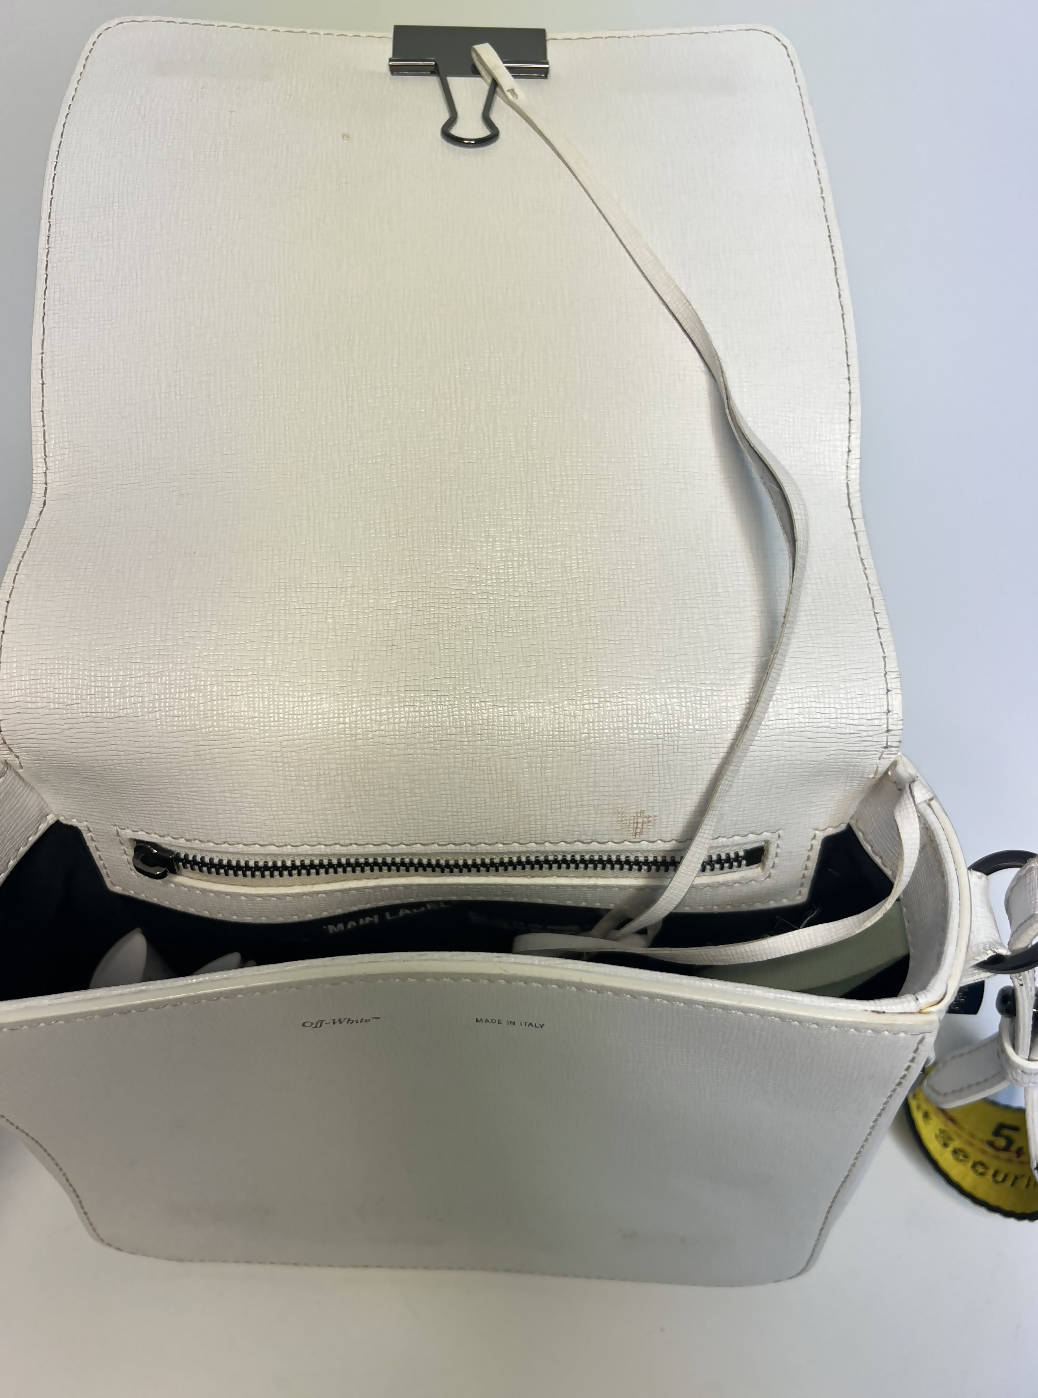 OFF-WHITE C/O VIRGIL ABLOH Diagonal stripe leather cross-body bag